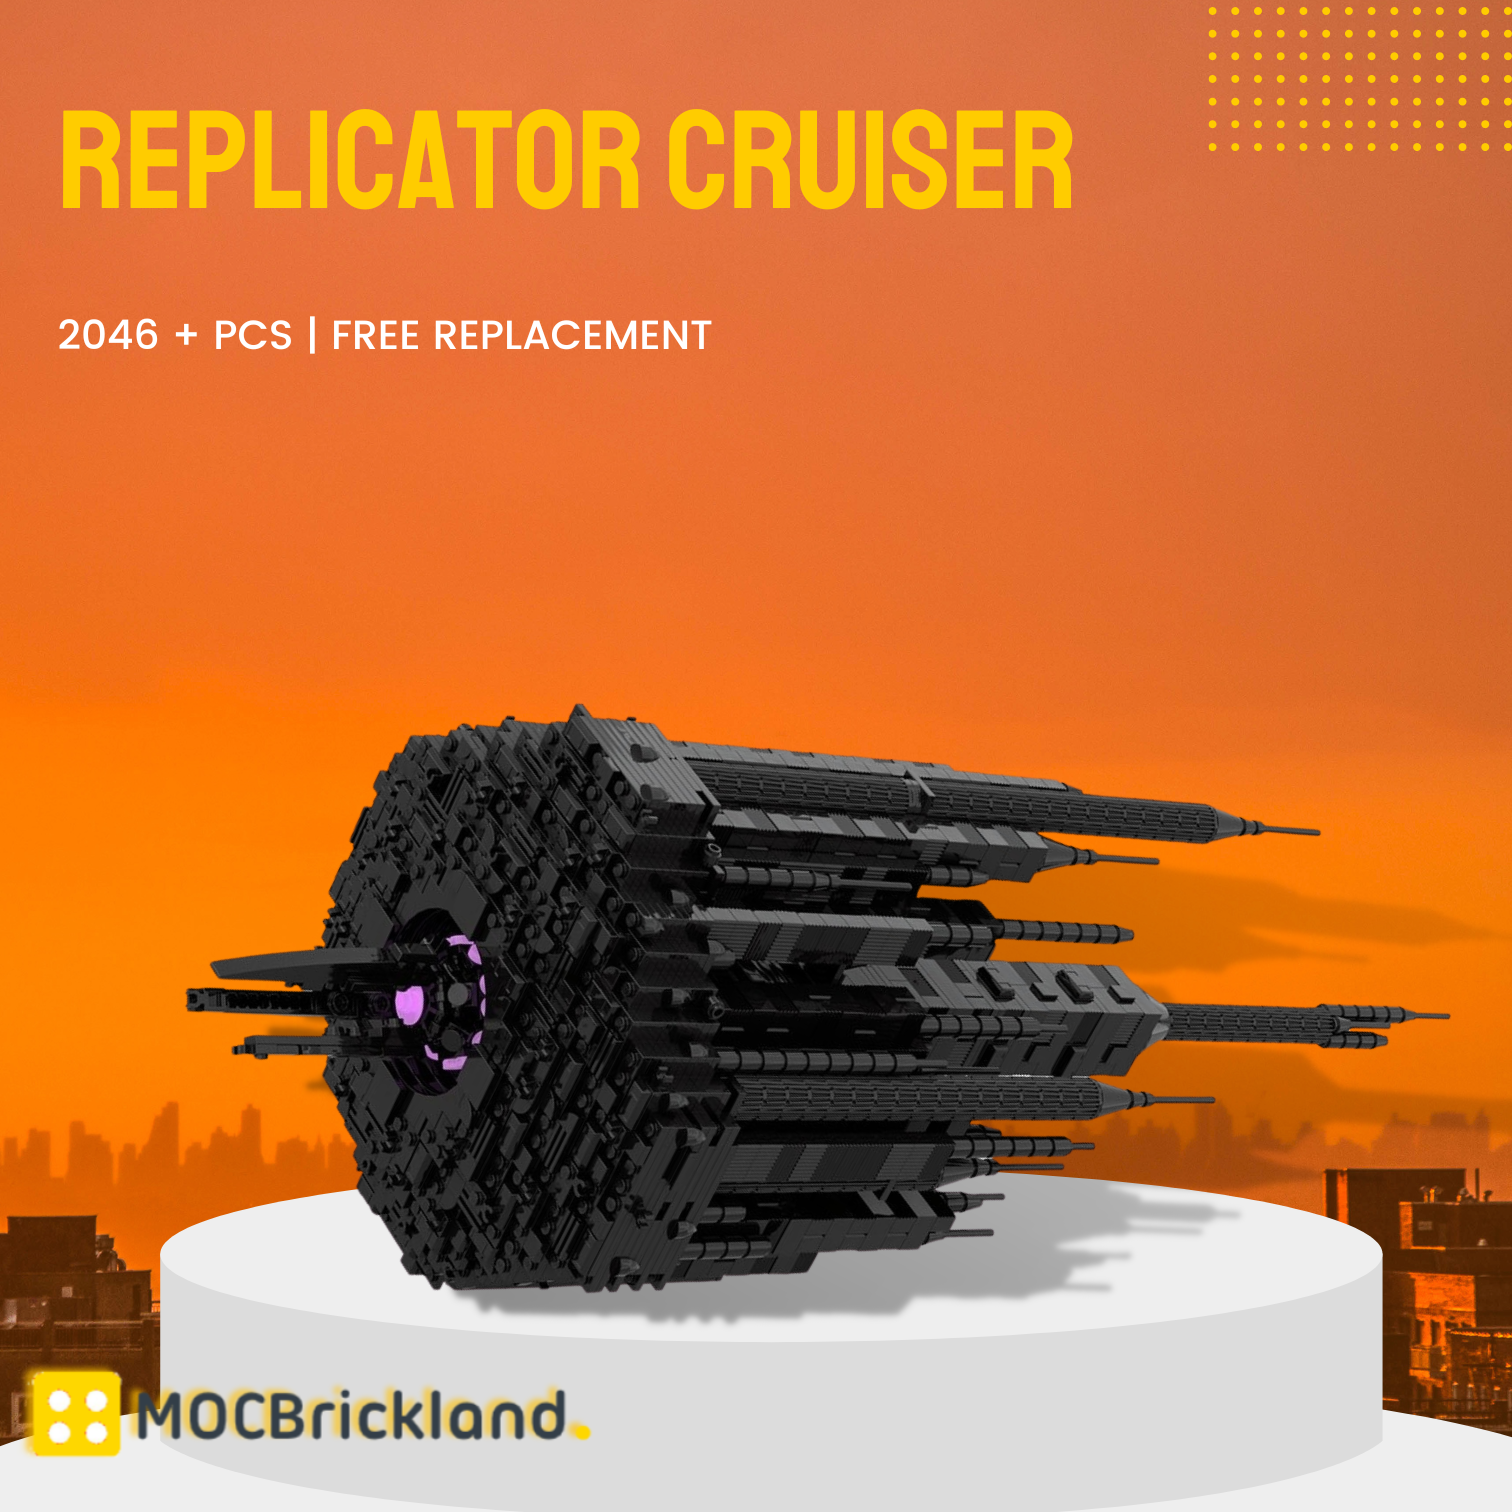 Space MOC-125965 Replicator Cruiser MOCBRICKLAND